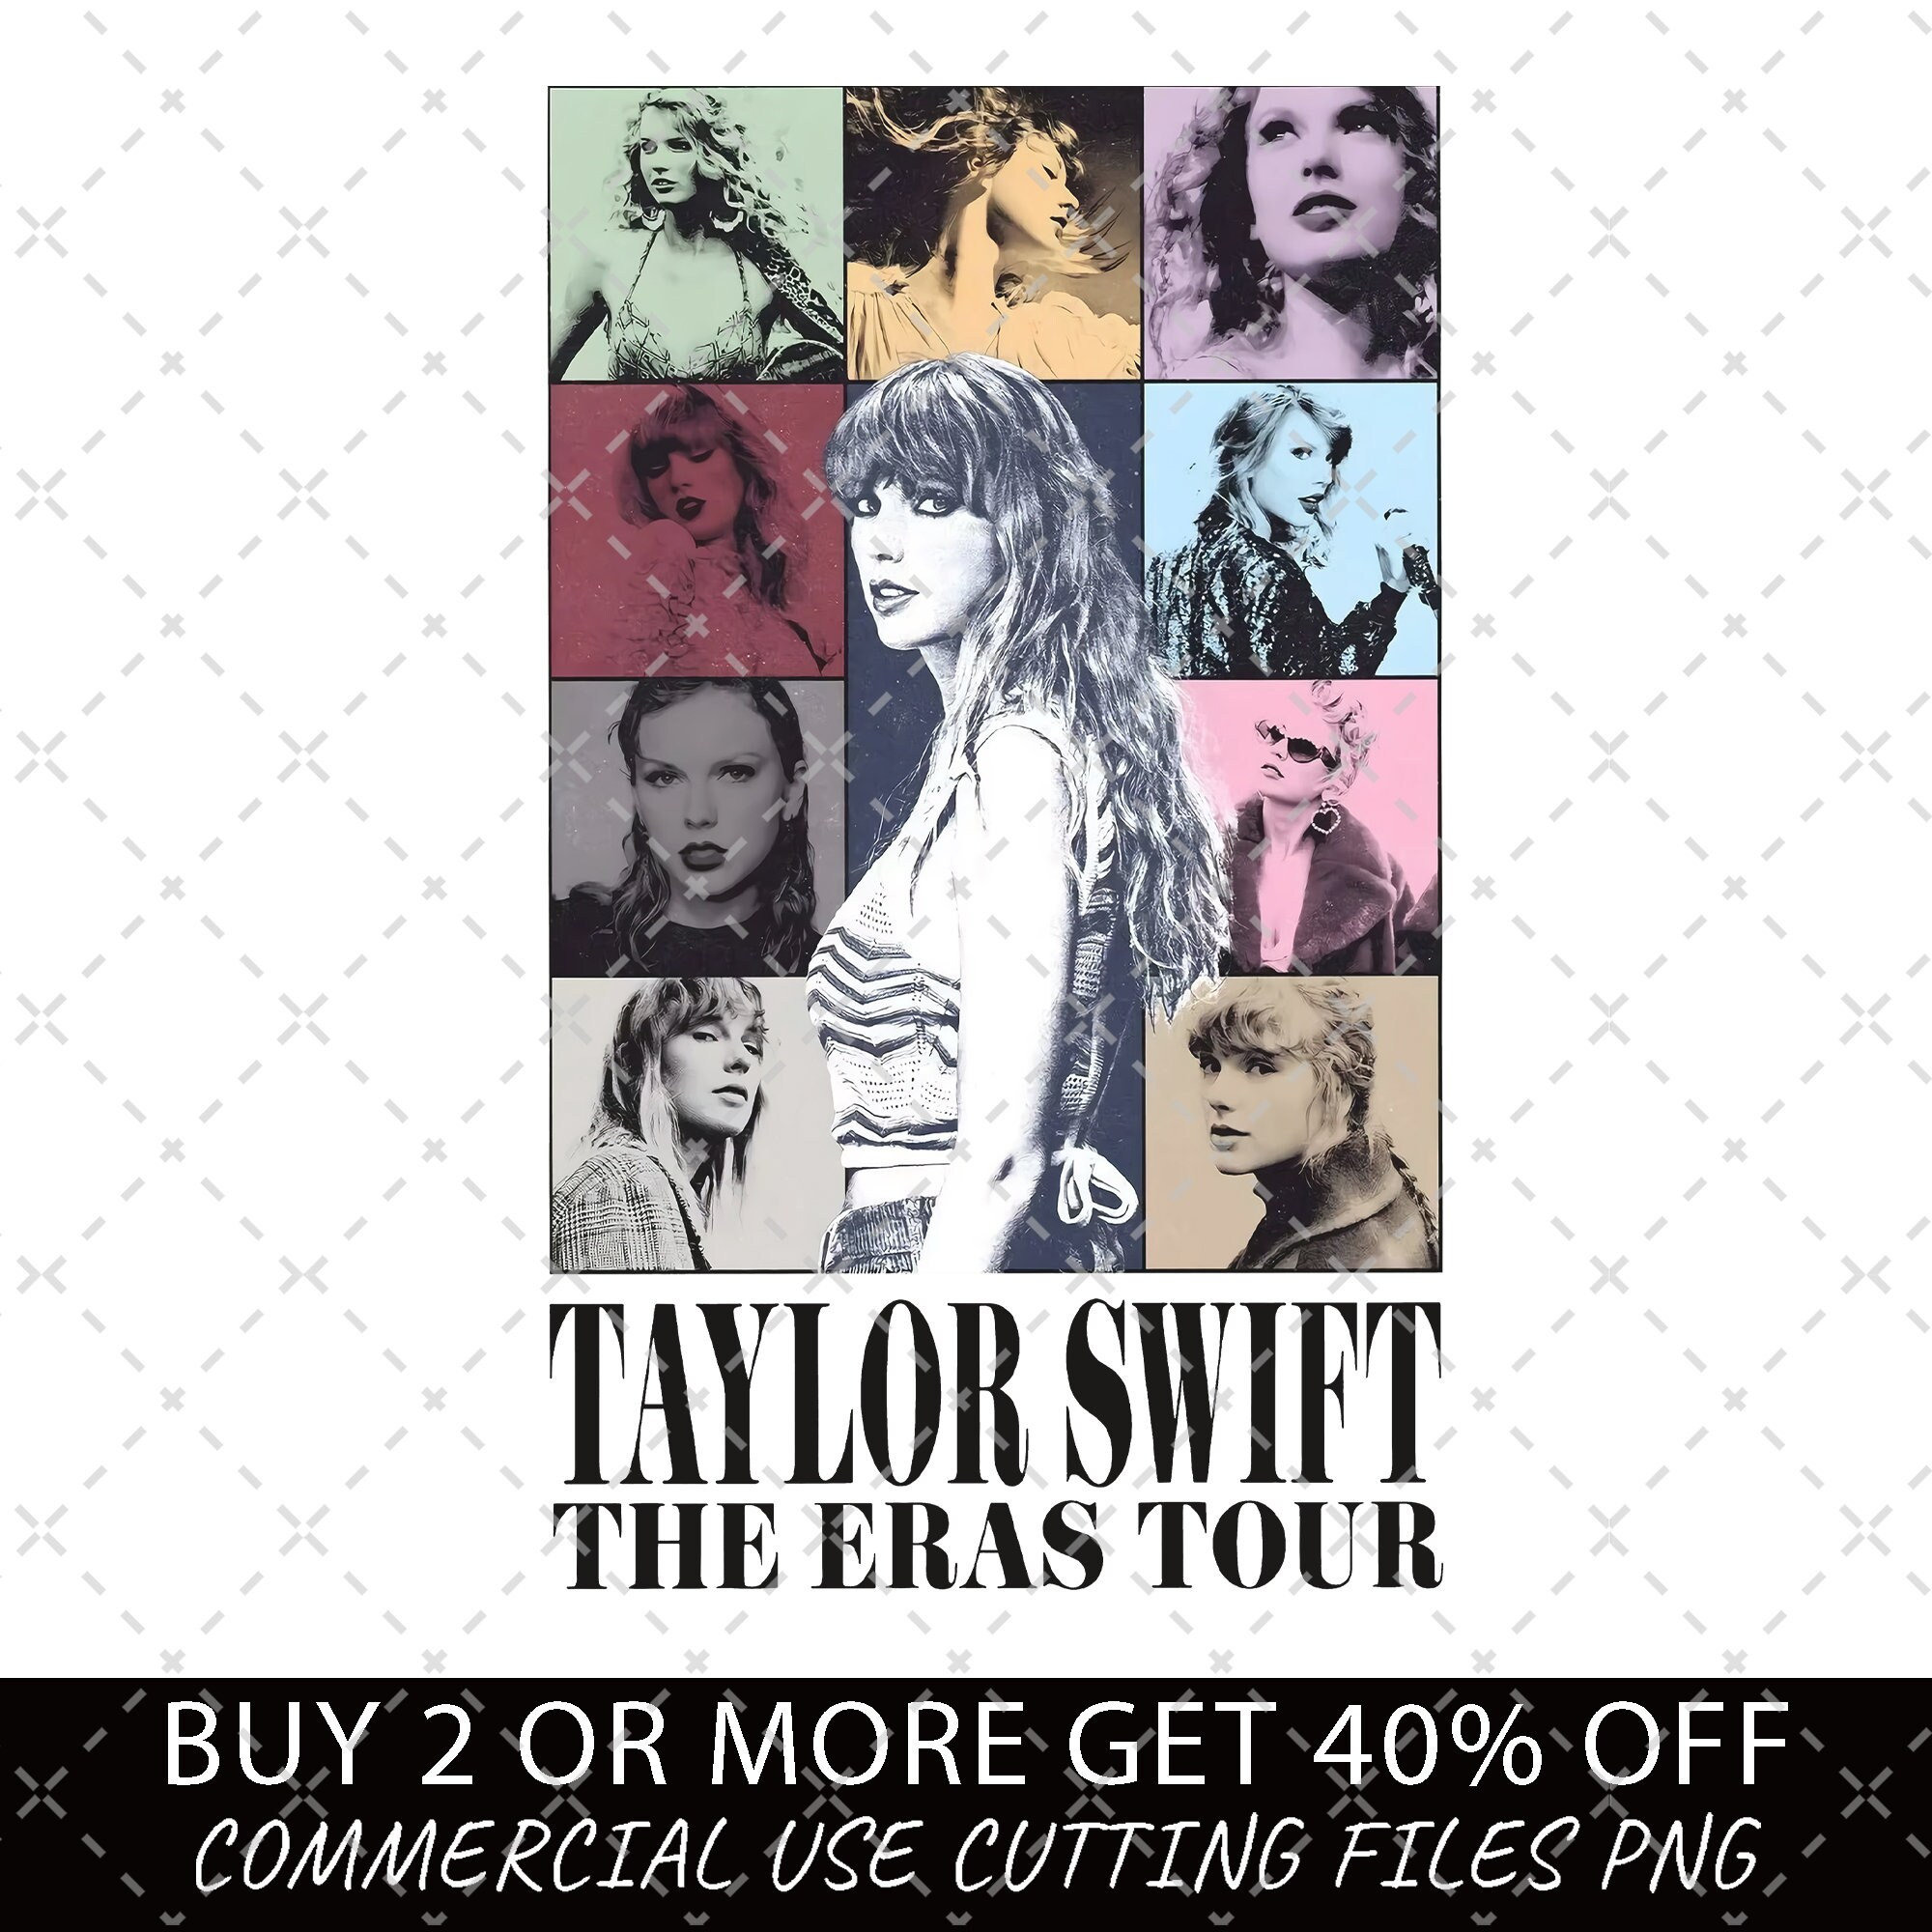 Taylor Swift Album Collage Poster 24 x 36 – PosterAmerica